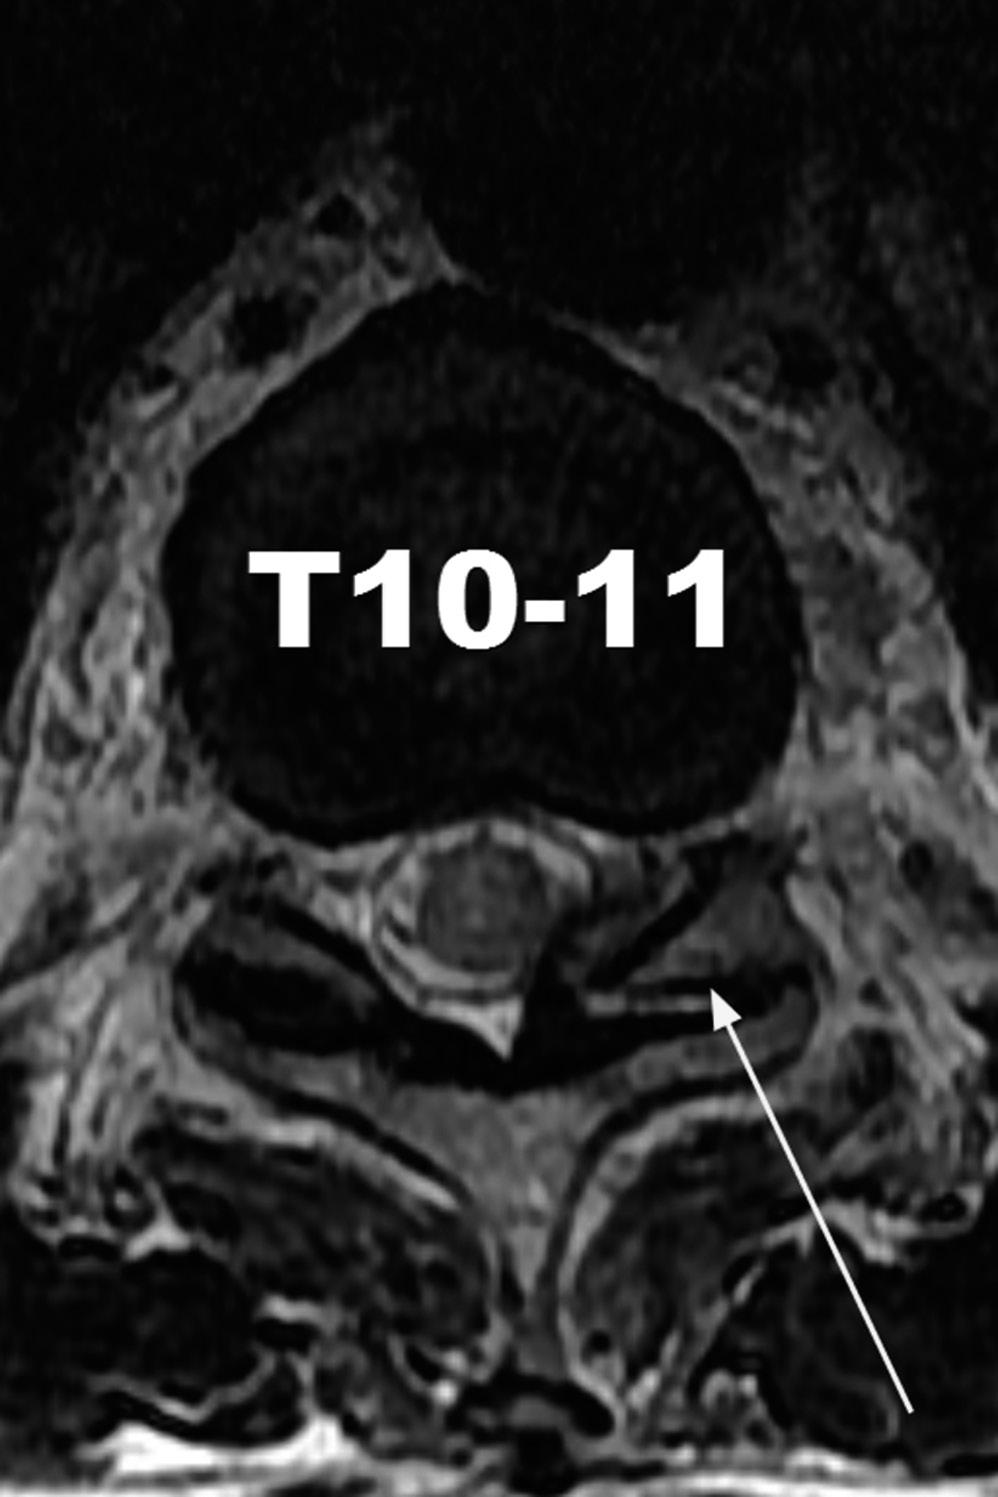 Showing T11 body and left pedicle, L2 body fracture 기저질환없이건강했던 62세남자환자가 3층높이에서낙상한후흉-요추부의통증및하지의마비증상이발생하여내원하였다.